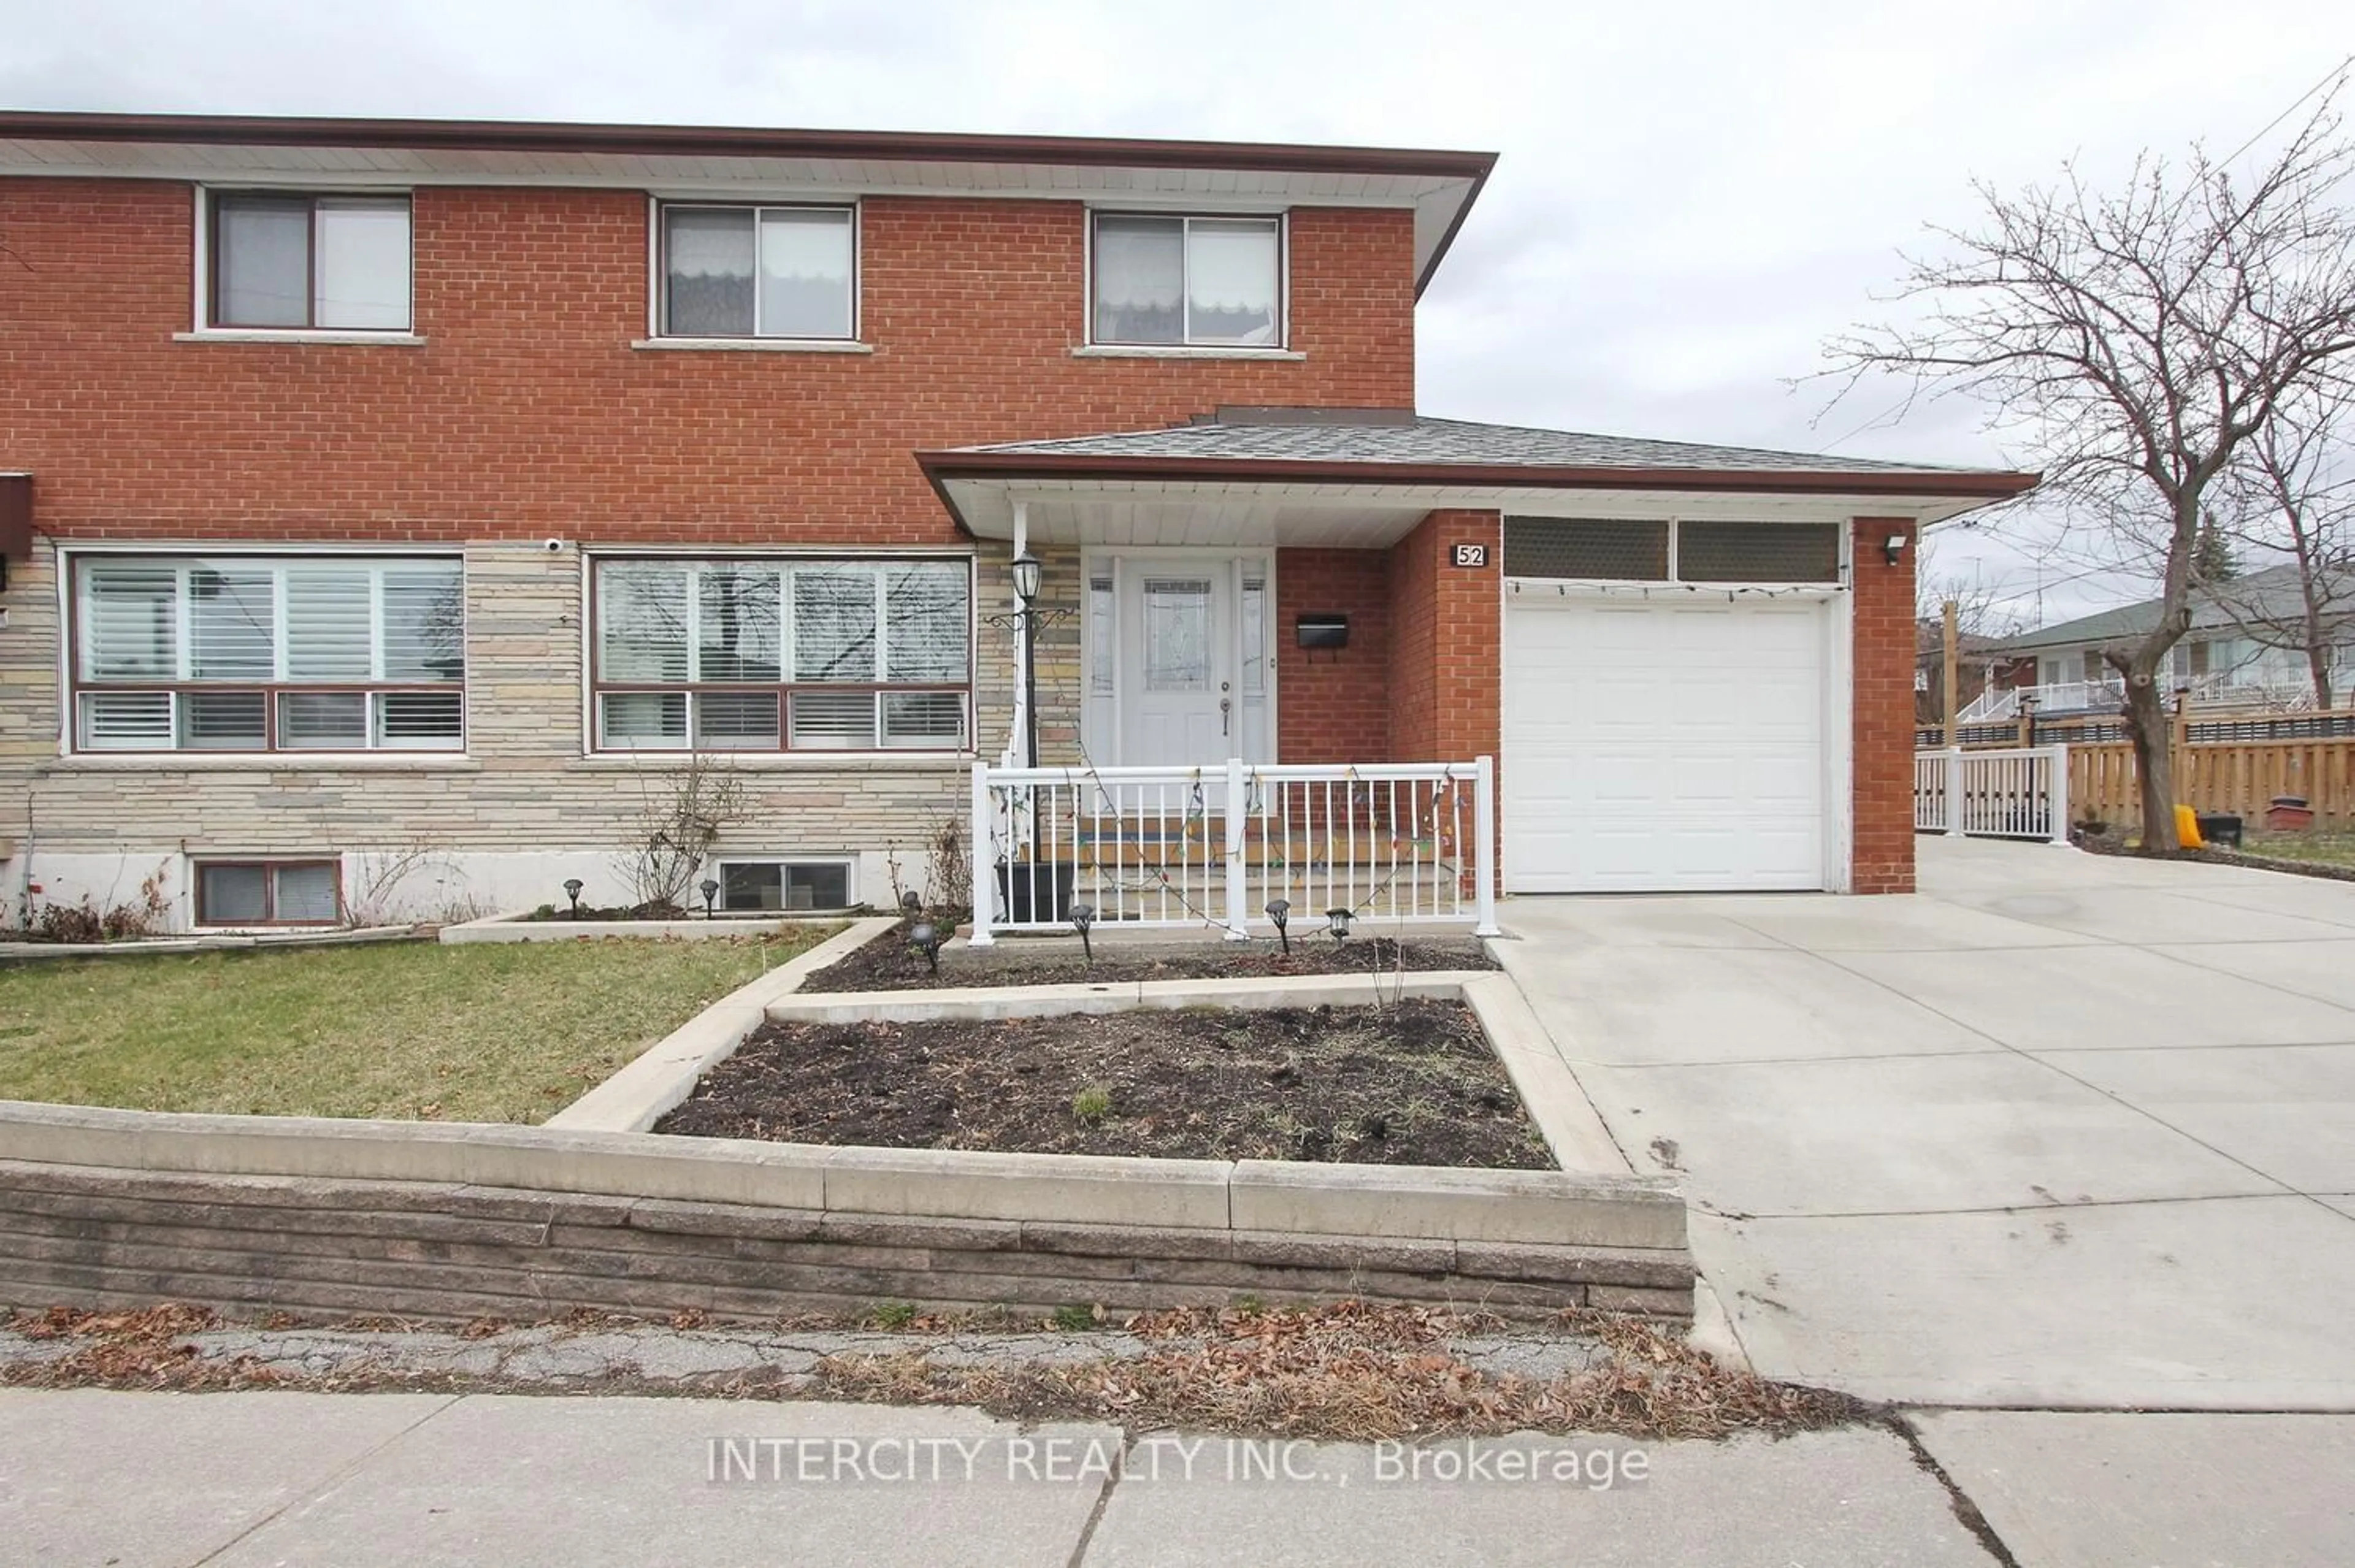 Home with brick exterior material for 52 Ardwick Blvd, Toronto Ontario M9M 1W1